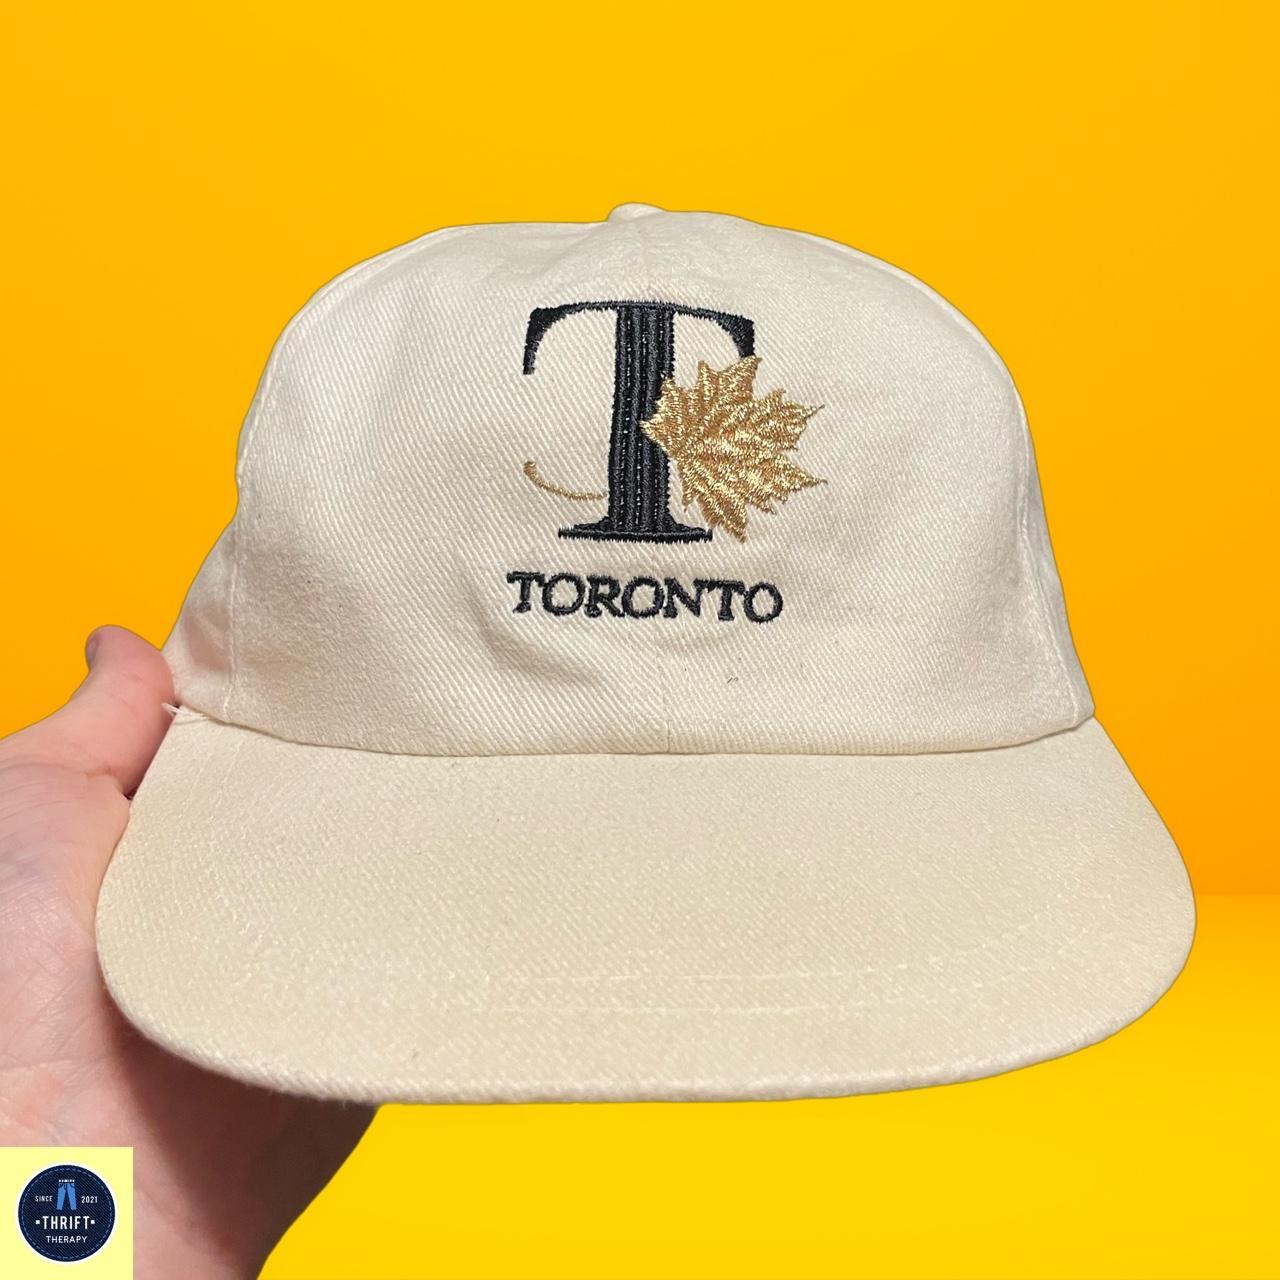 Vintage Toronto Maple Leafs Hat 90s Toronto Maple Leafs Cap 